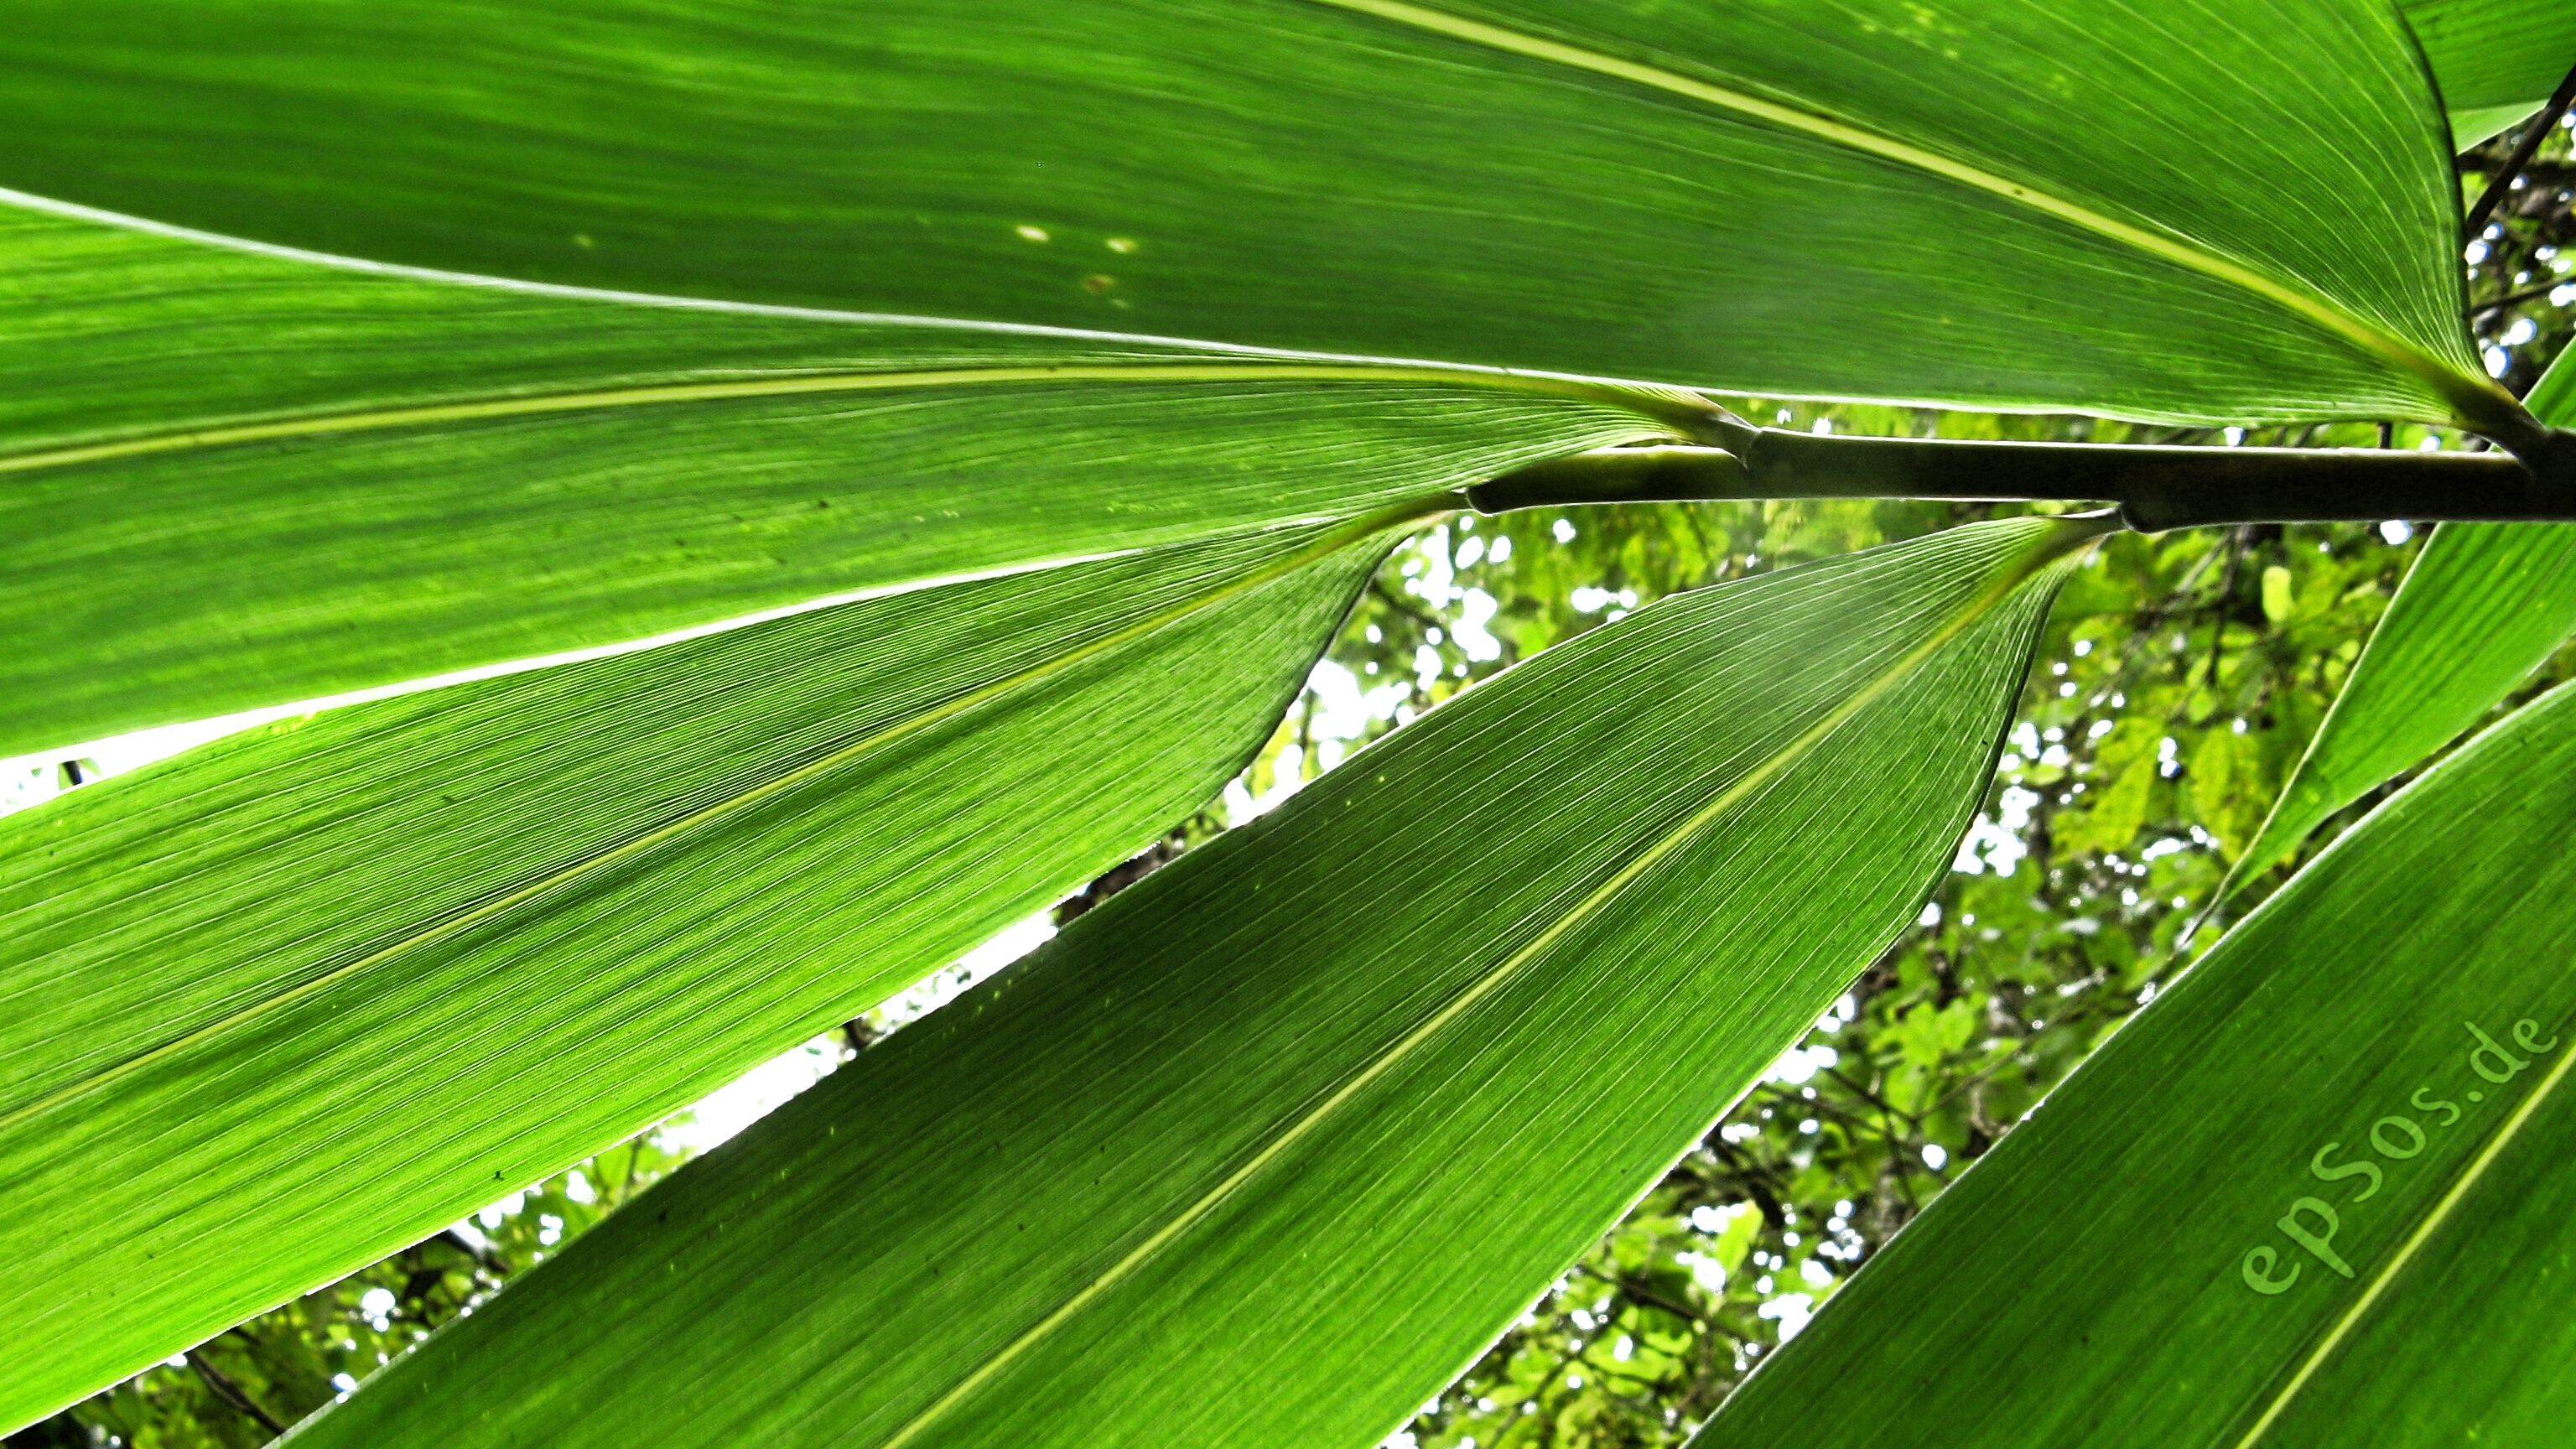 File:Organic Green Leafs of Bamboo.jpg - Wikimedia Commons